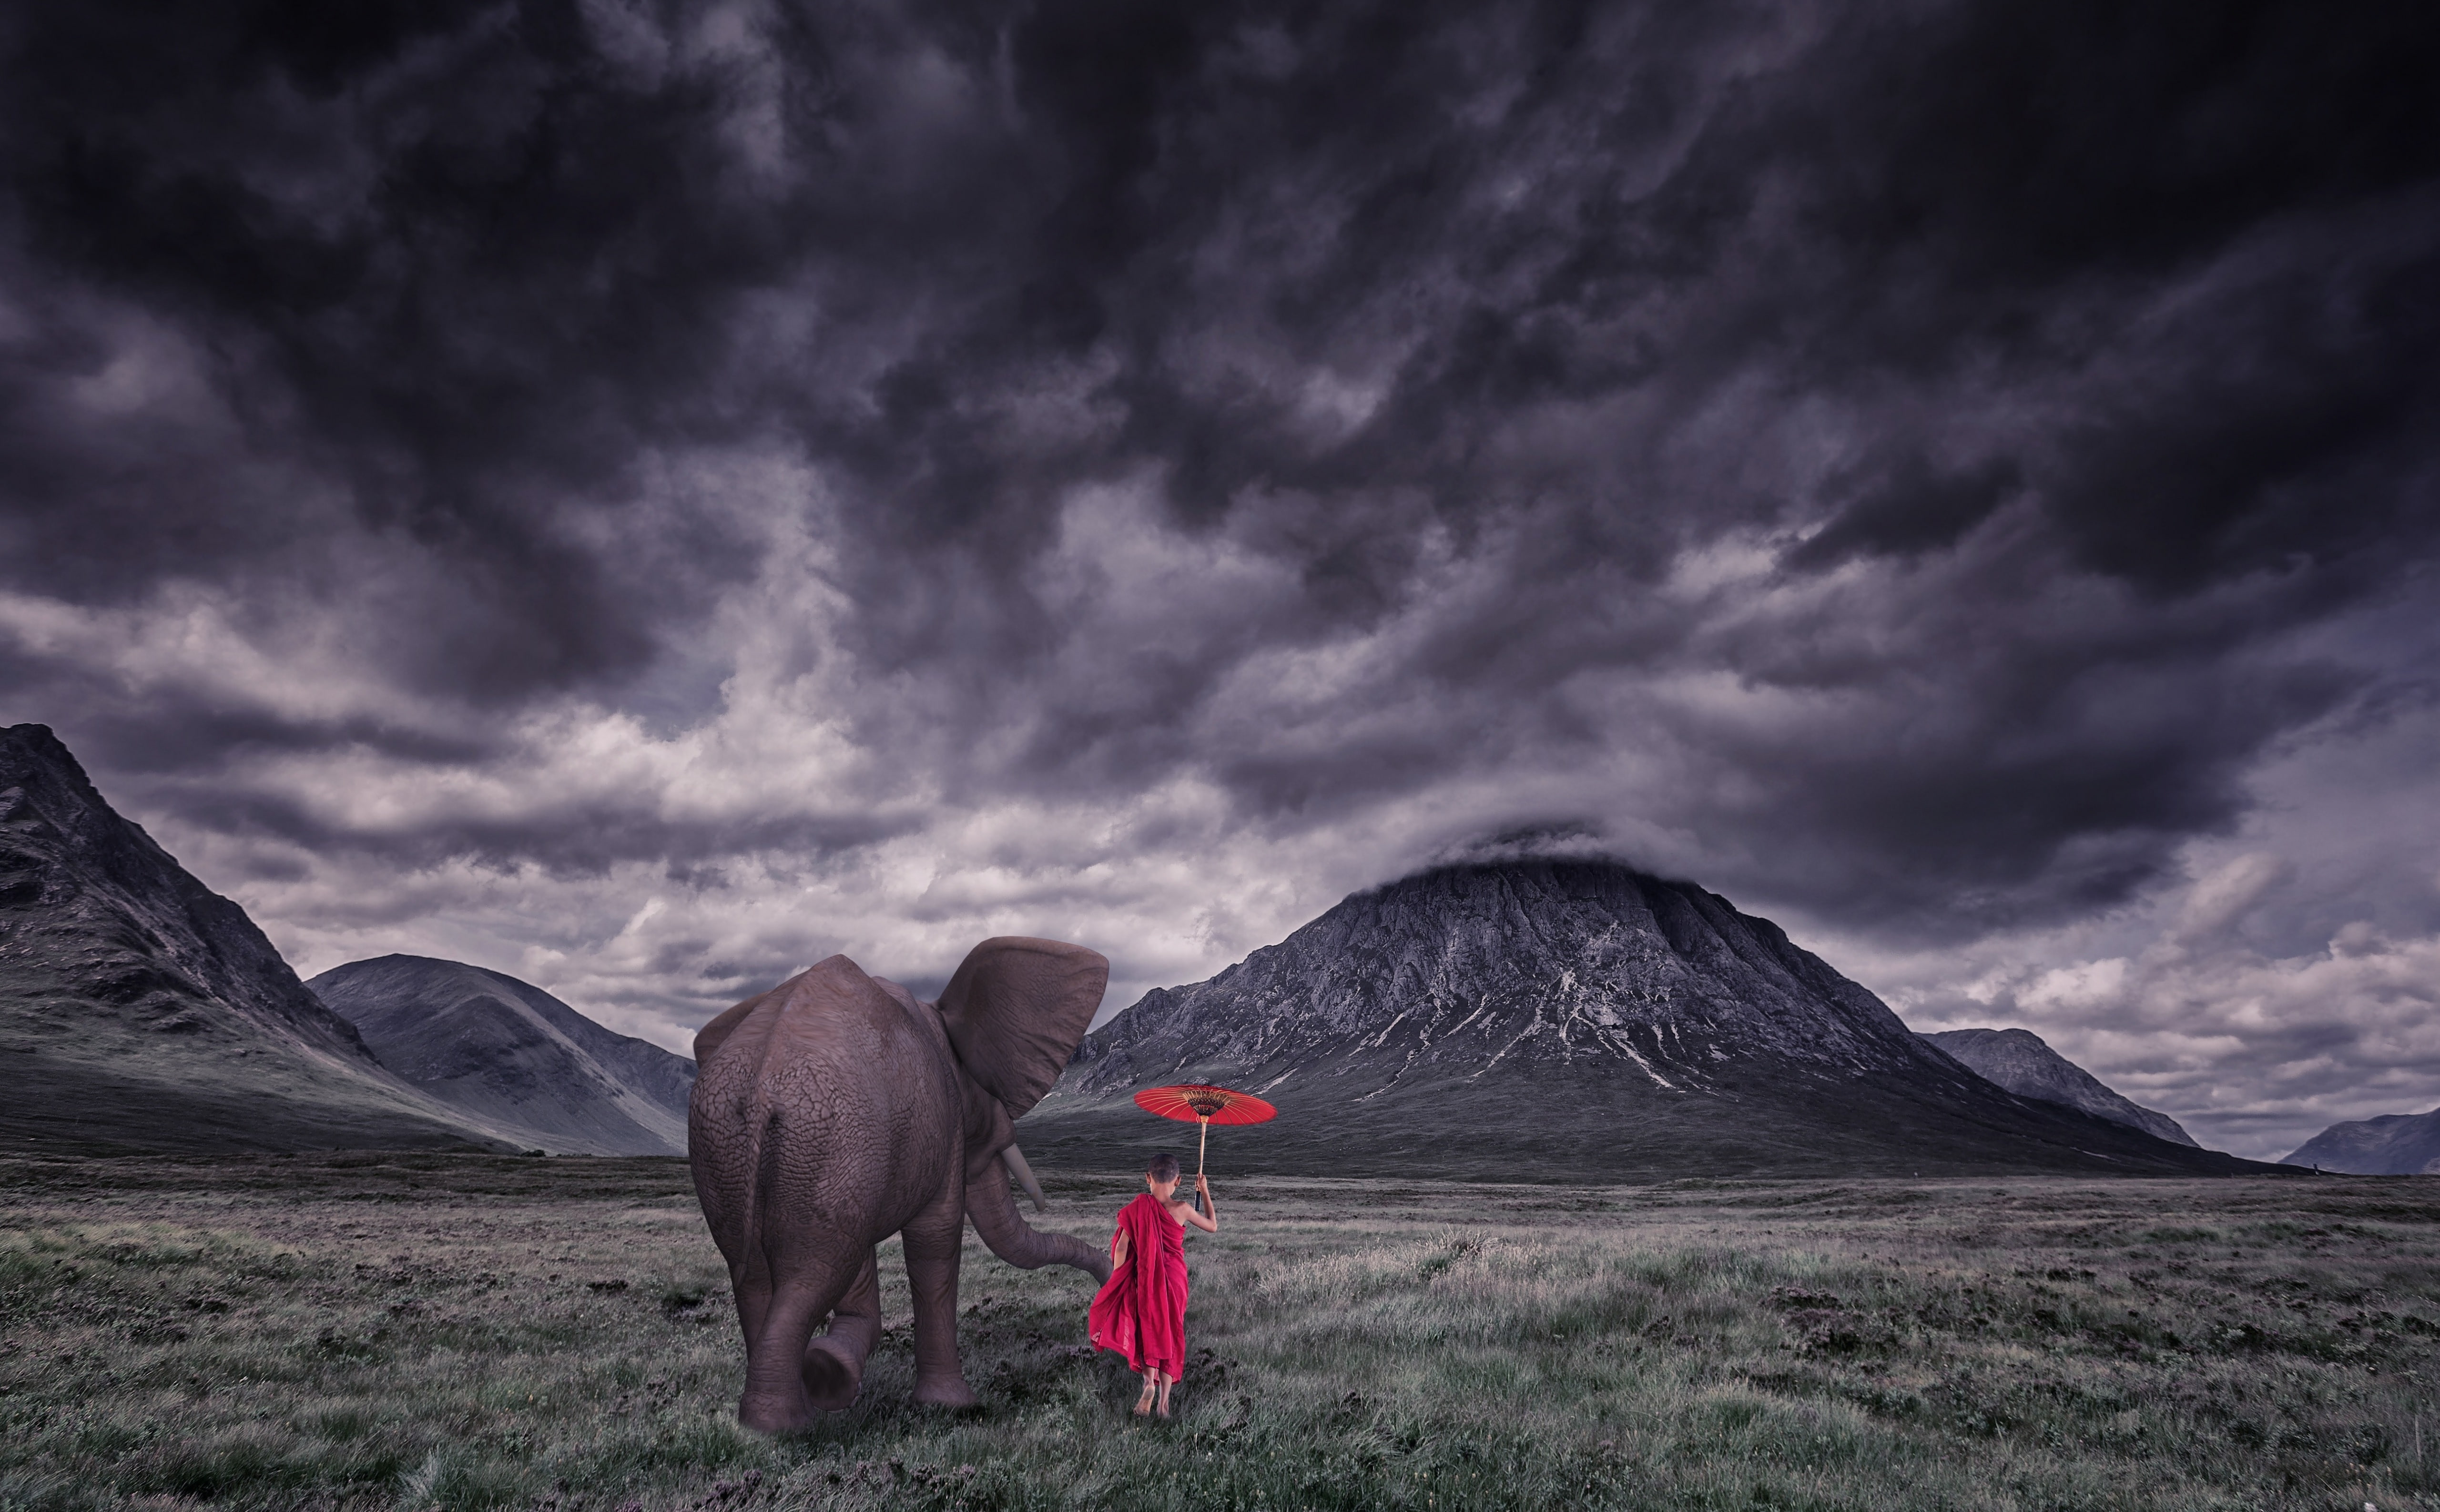 Elephant, Child Monk, Field, Storm Clouds, Aero, Creative, Wild